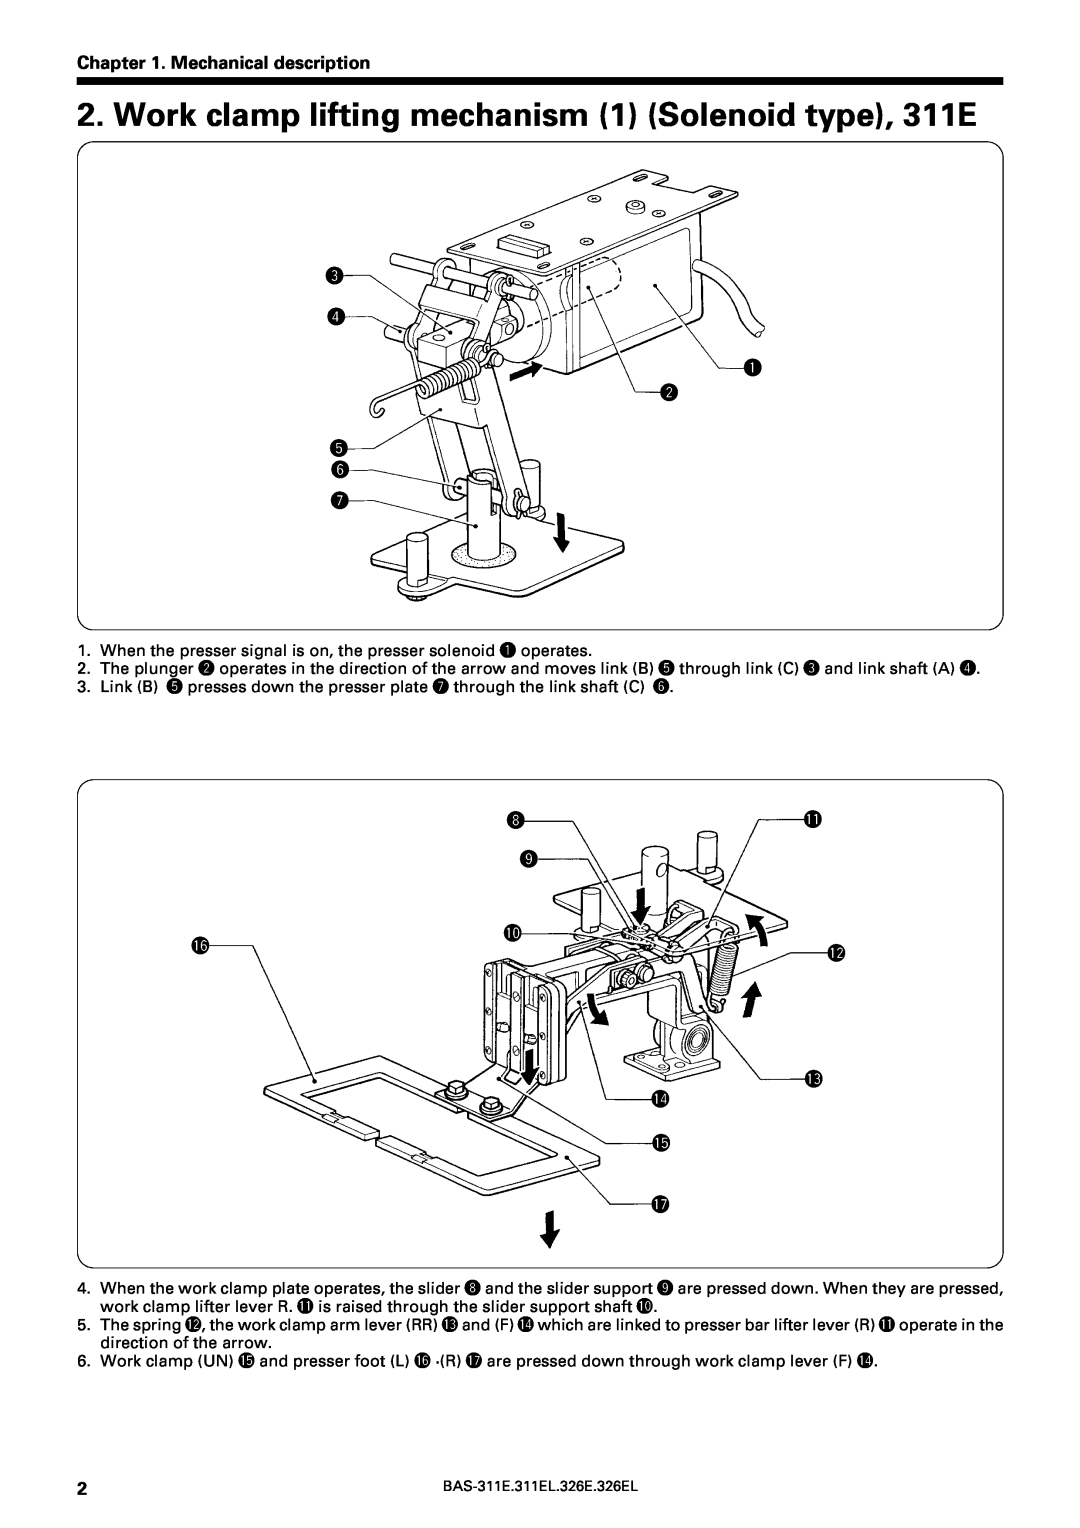 Brother BAS-311E service manual Work clamp lifting mechanism 1 Solenoid type, 311E, Mechanical description, e r q w t y u 